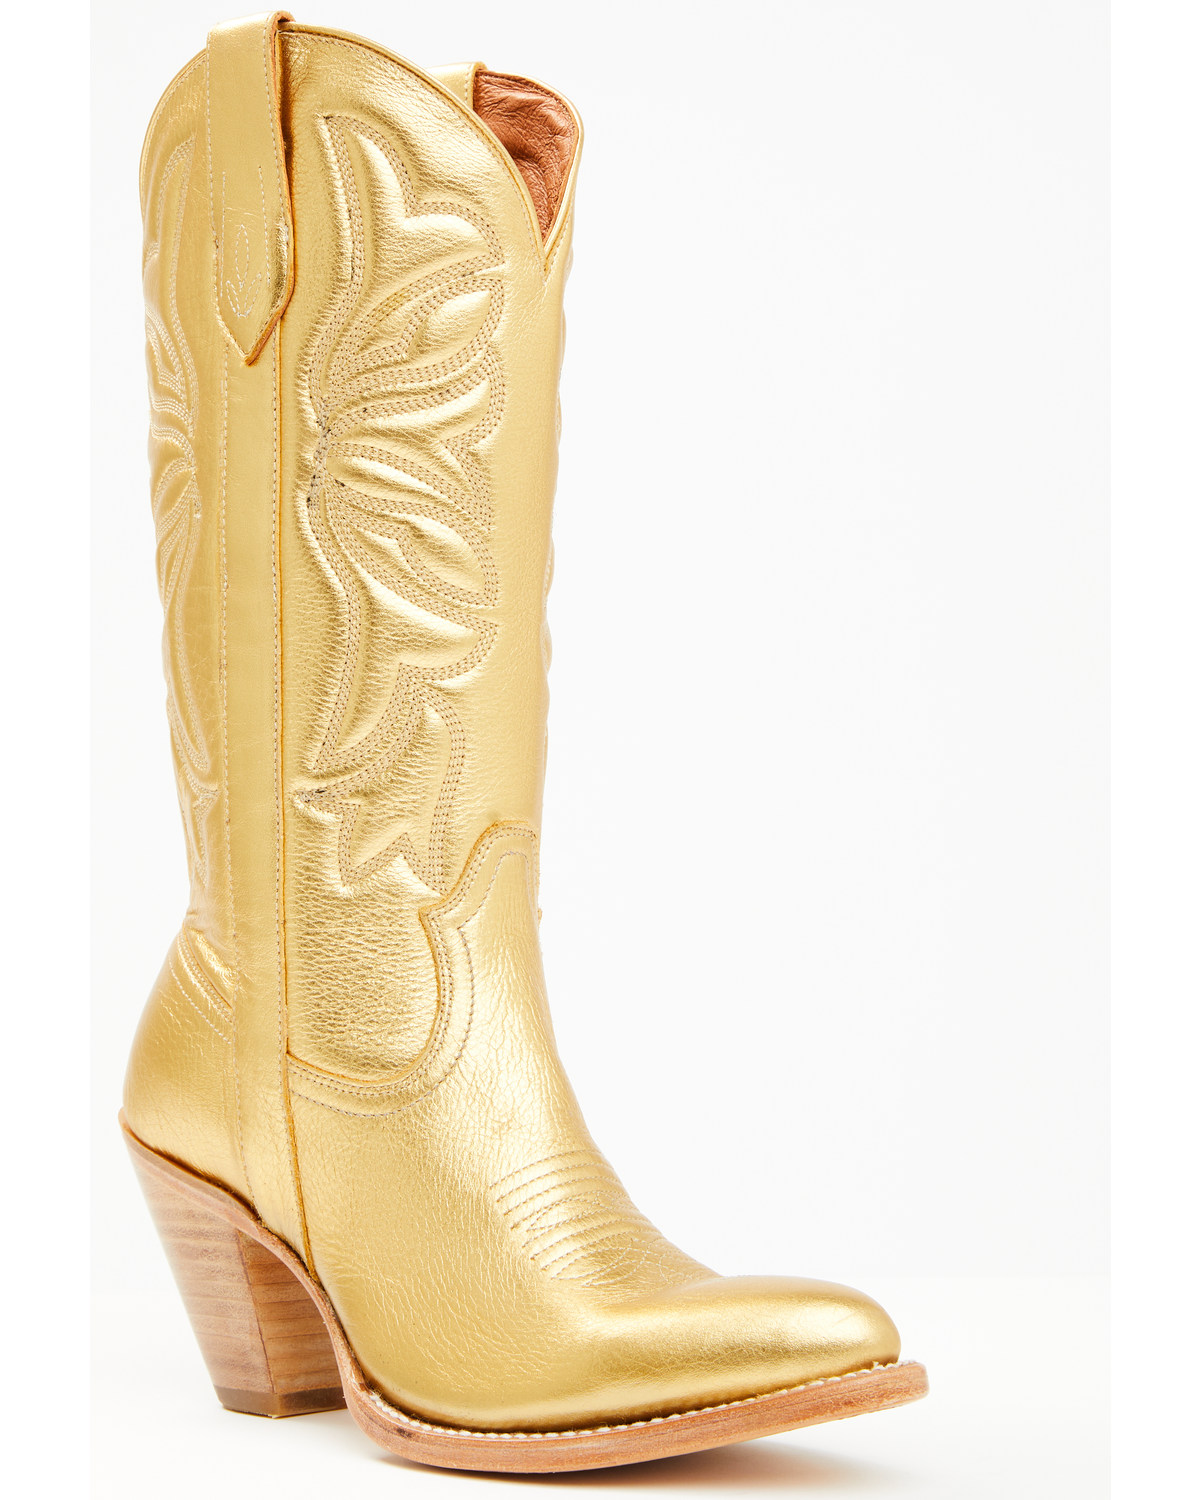 Idyllwind Women's Sunset Ride Western Boots - Medium Toe